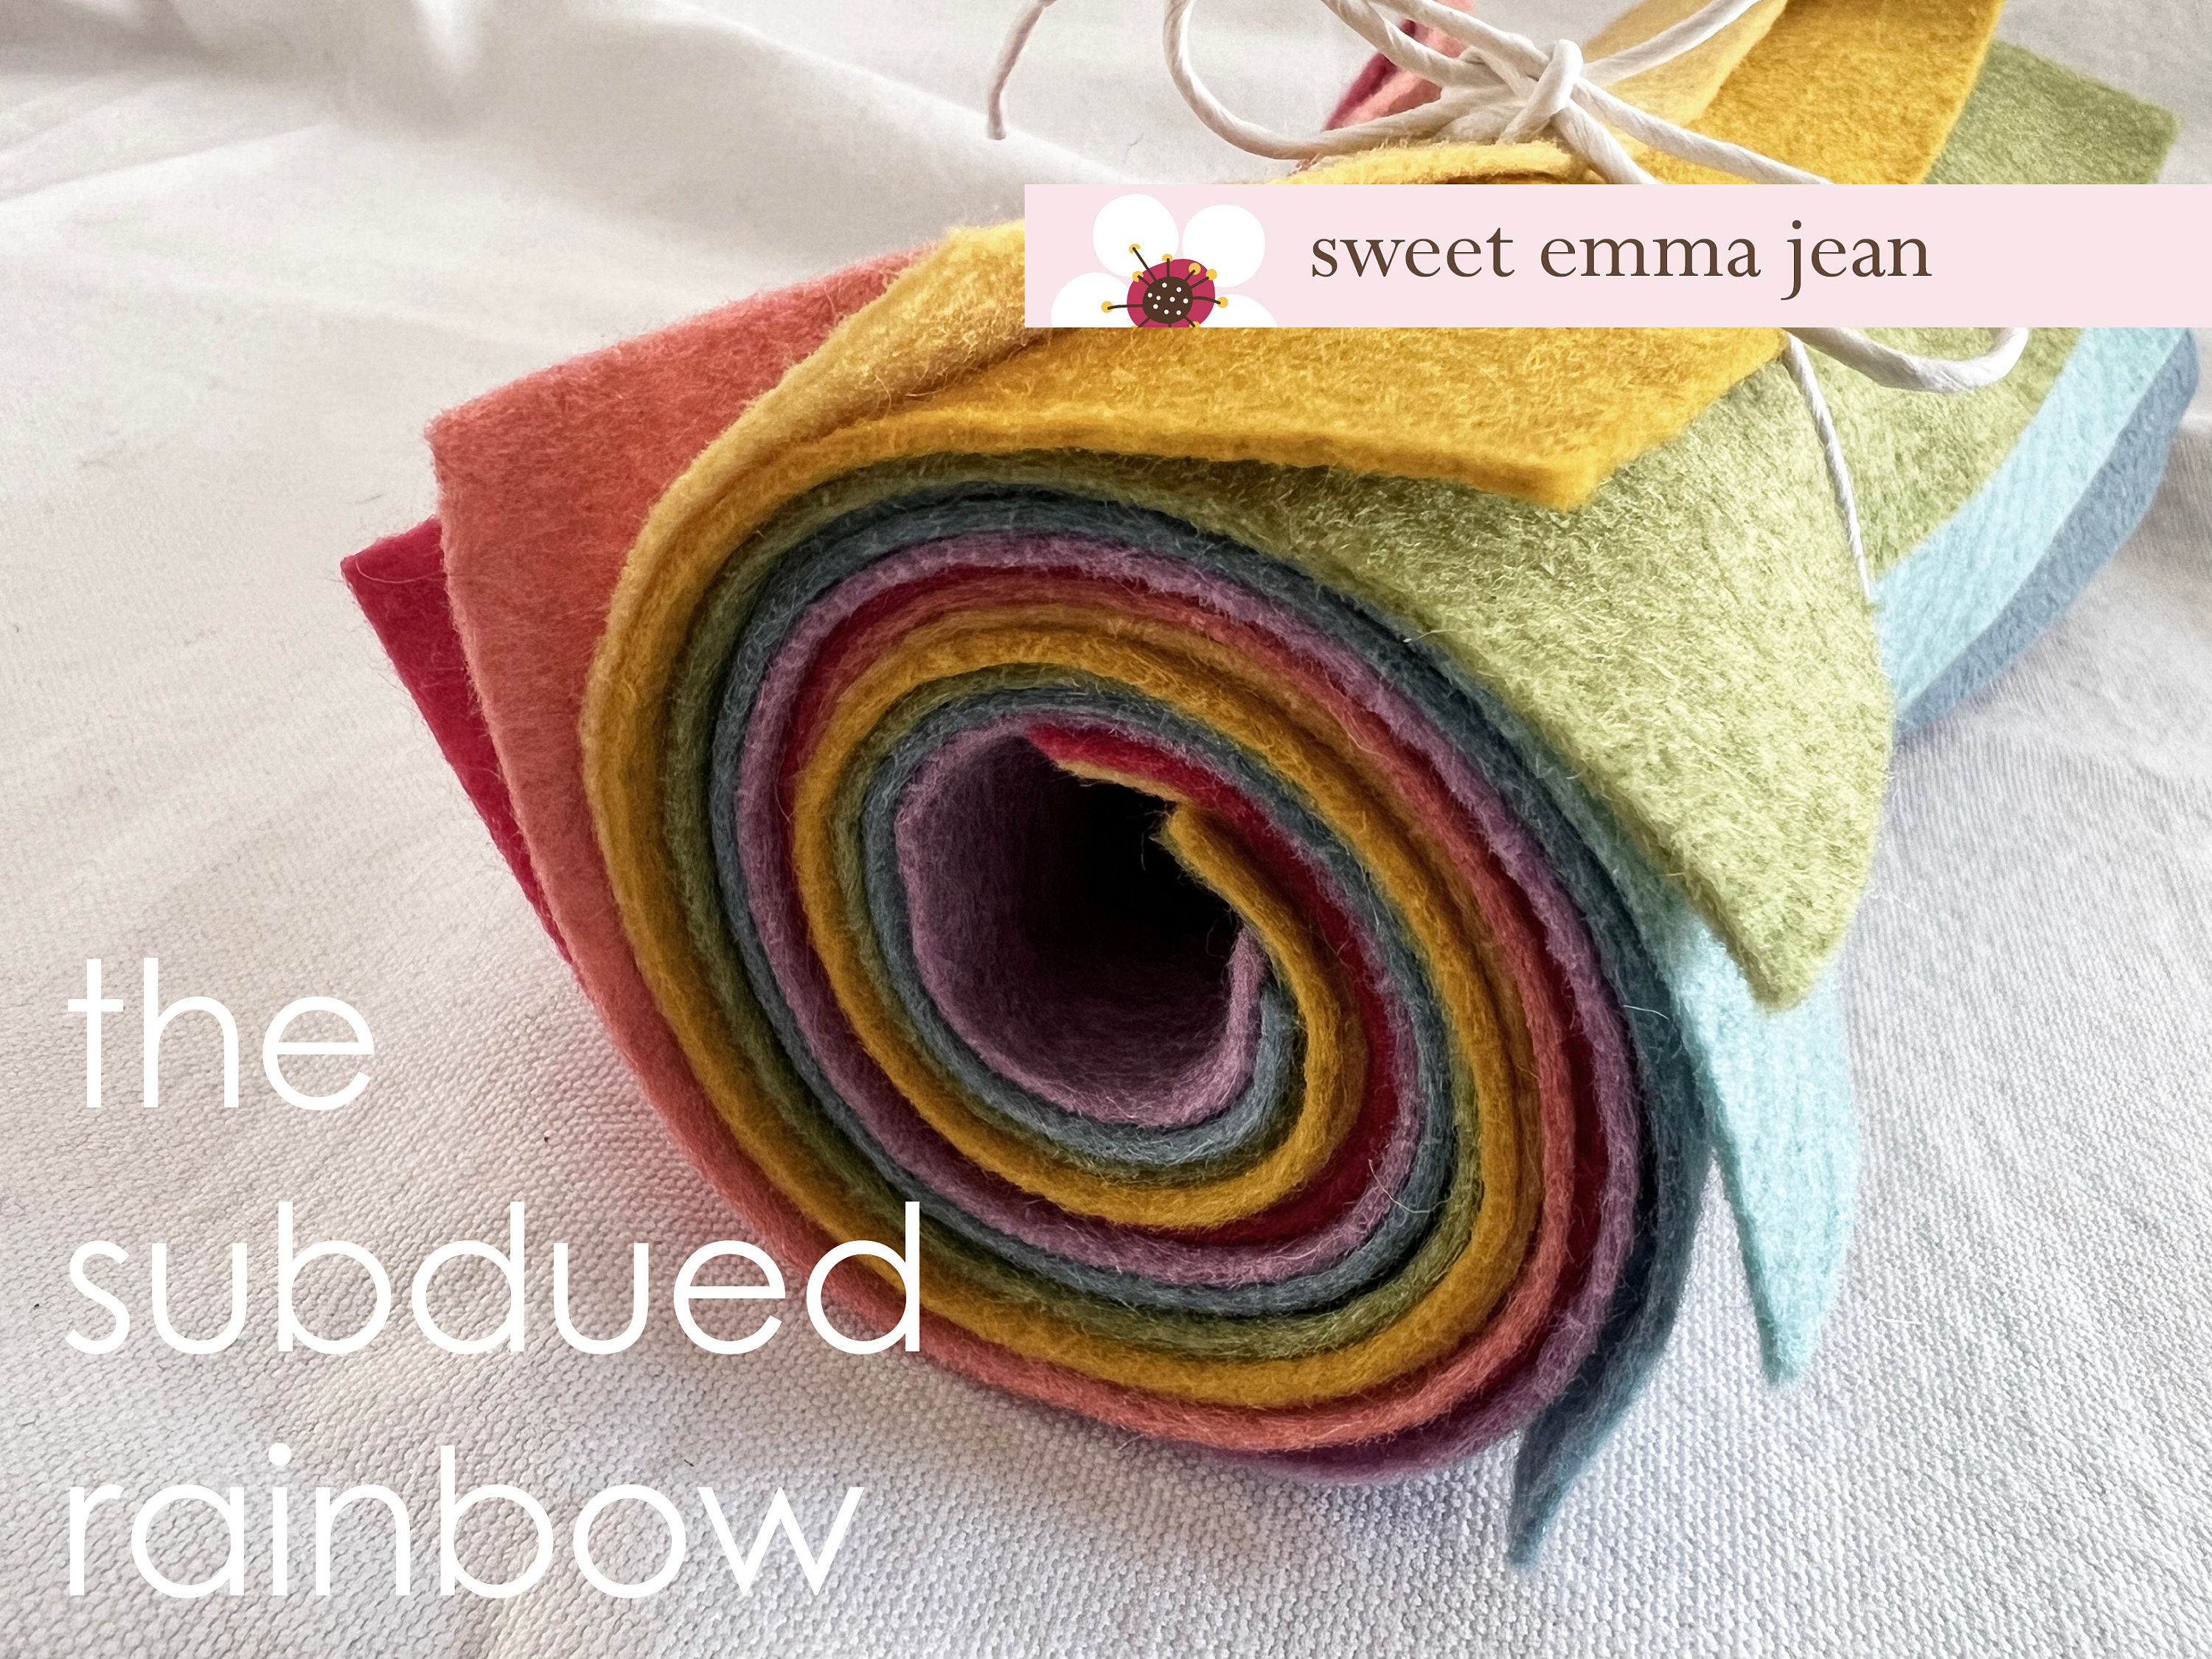 Modal Rayon Wool Fabric by the Yard Jersey Knit Fabric Desert Sand 7.5 Oz 